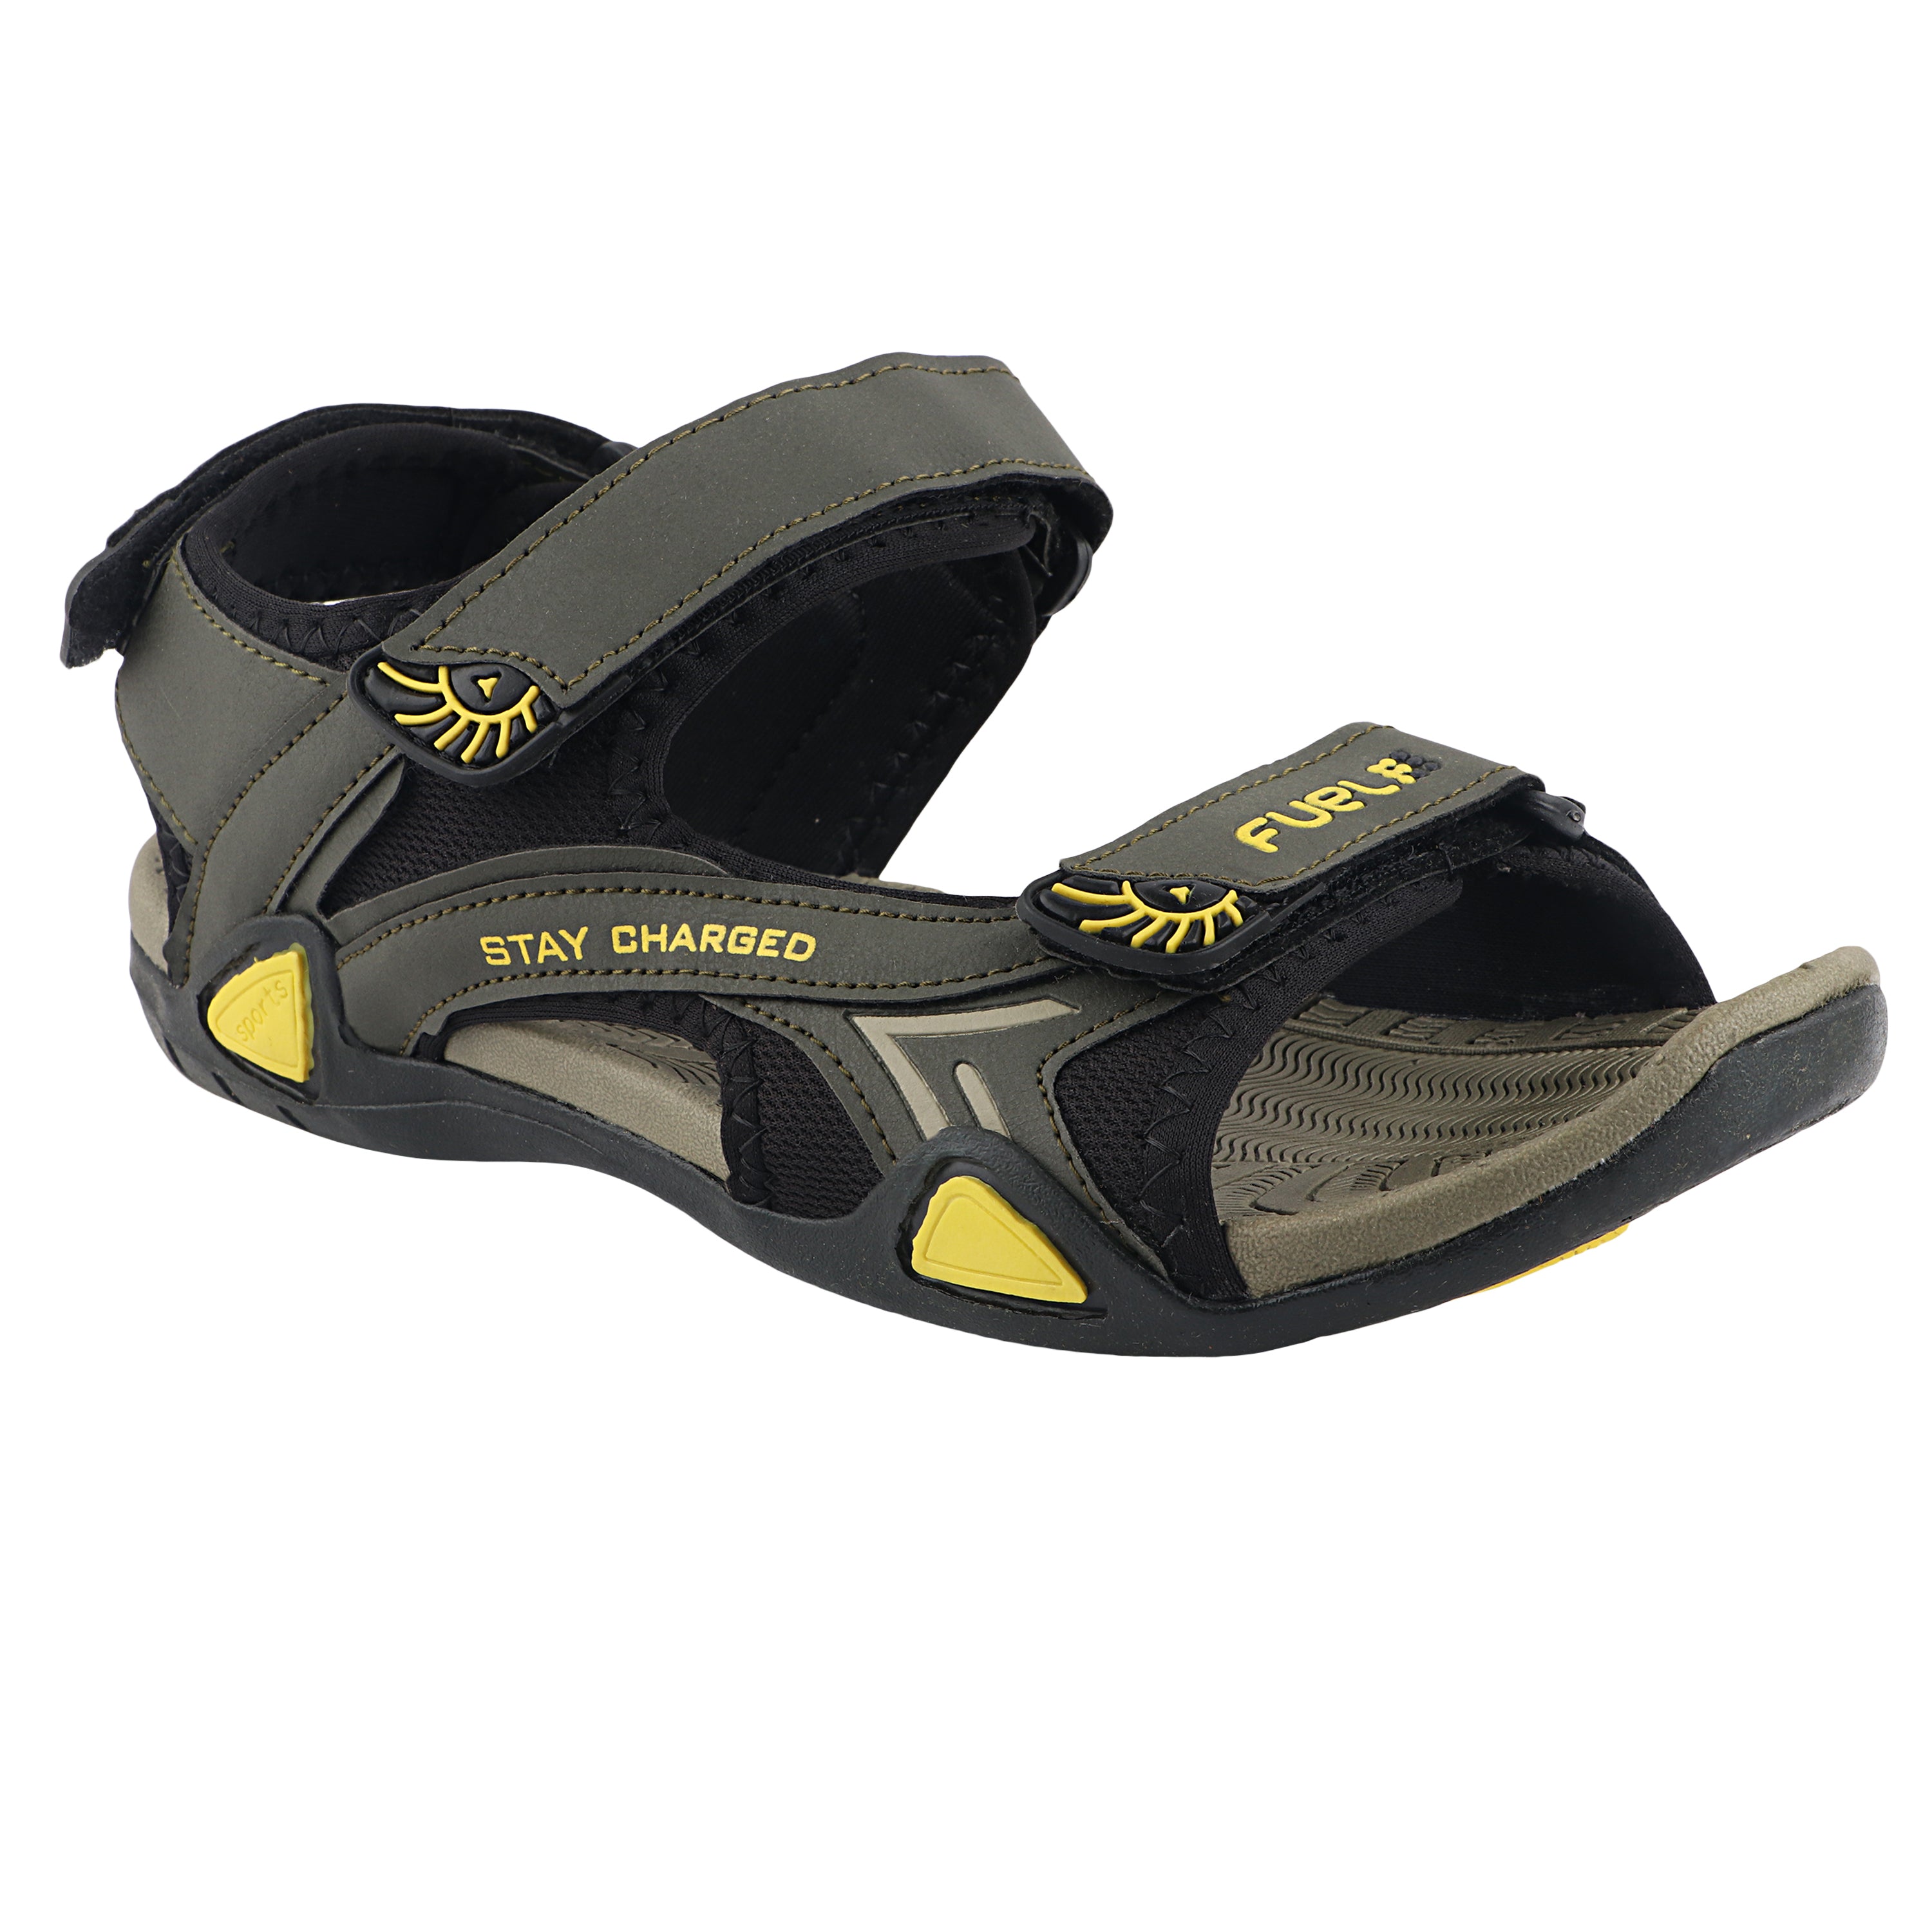 Toe shoes women yellow color Crocs Tulum Toe Post Sandal NEW | eBay